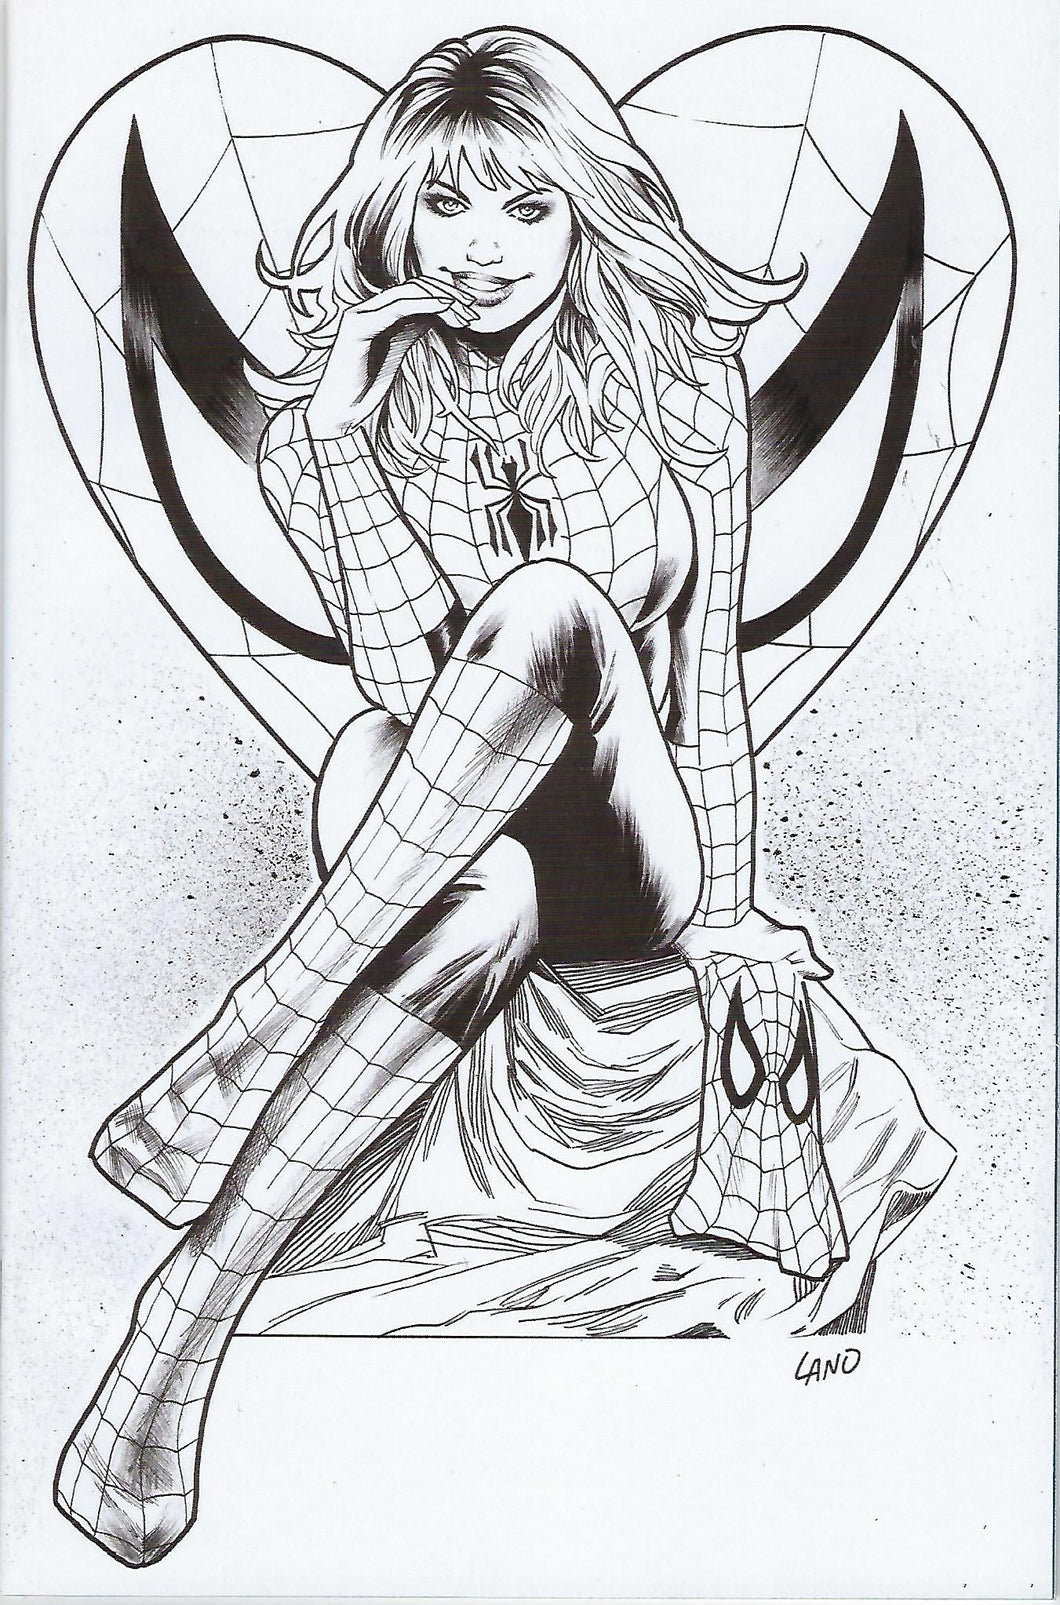 Amazing Spider-Man #25 Greg Land 1:50 Mary Jane Sketch Variant !!!   NM